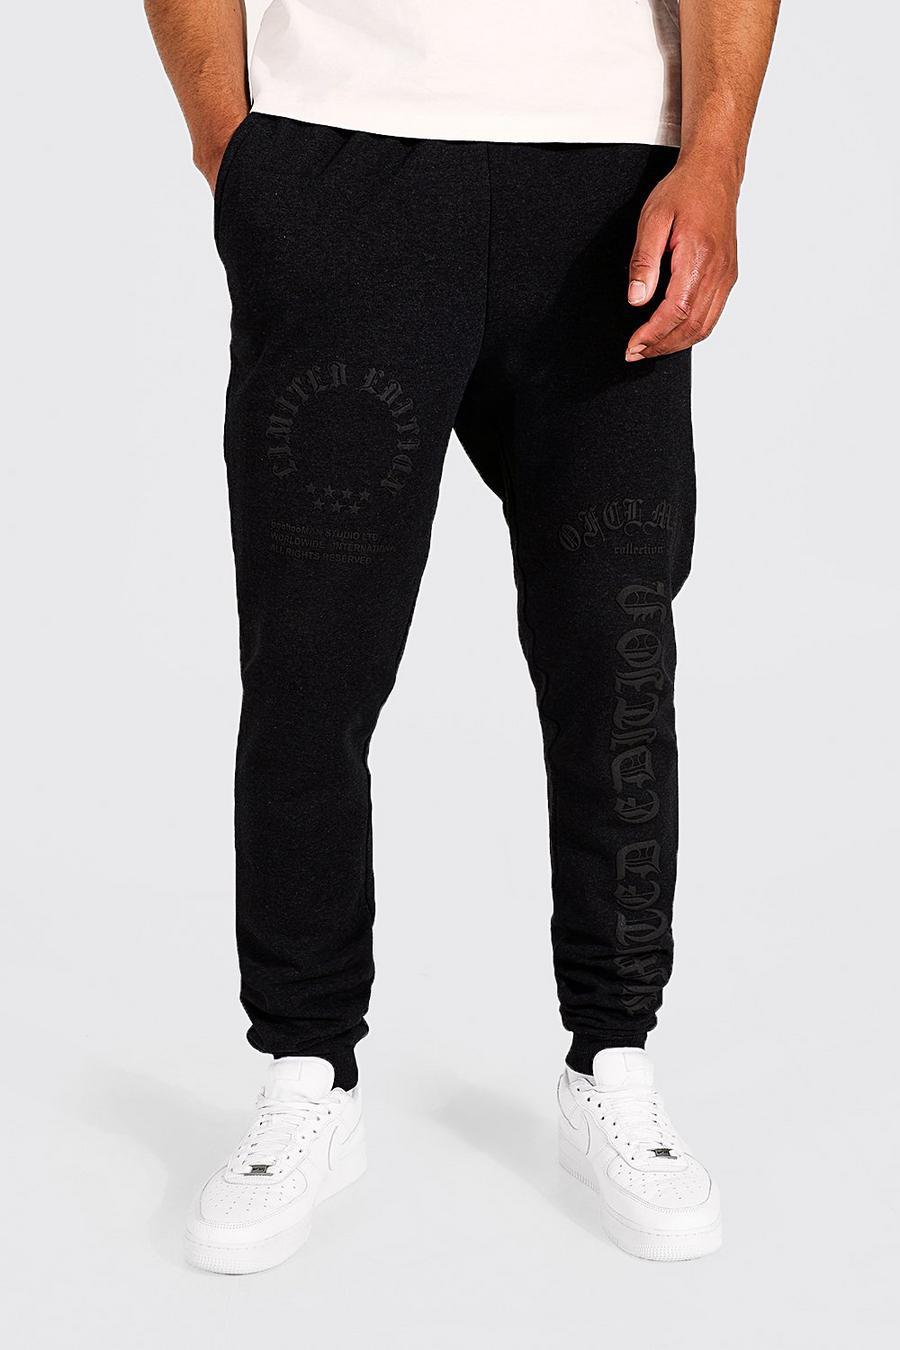 Pantaloni tuta Tall Limited Edition, Charcoal grigio image number 1